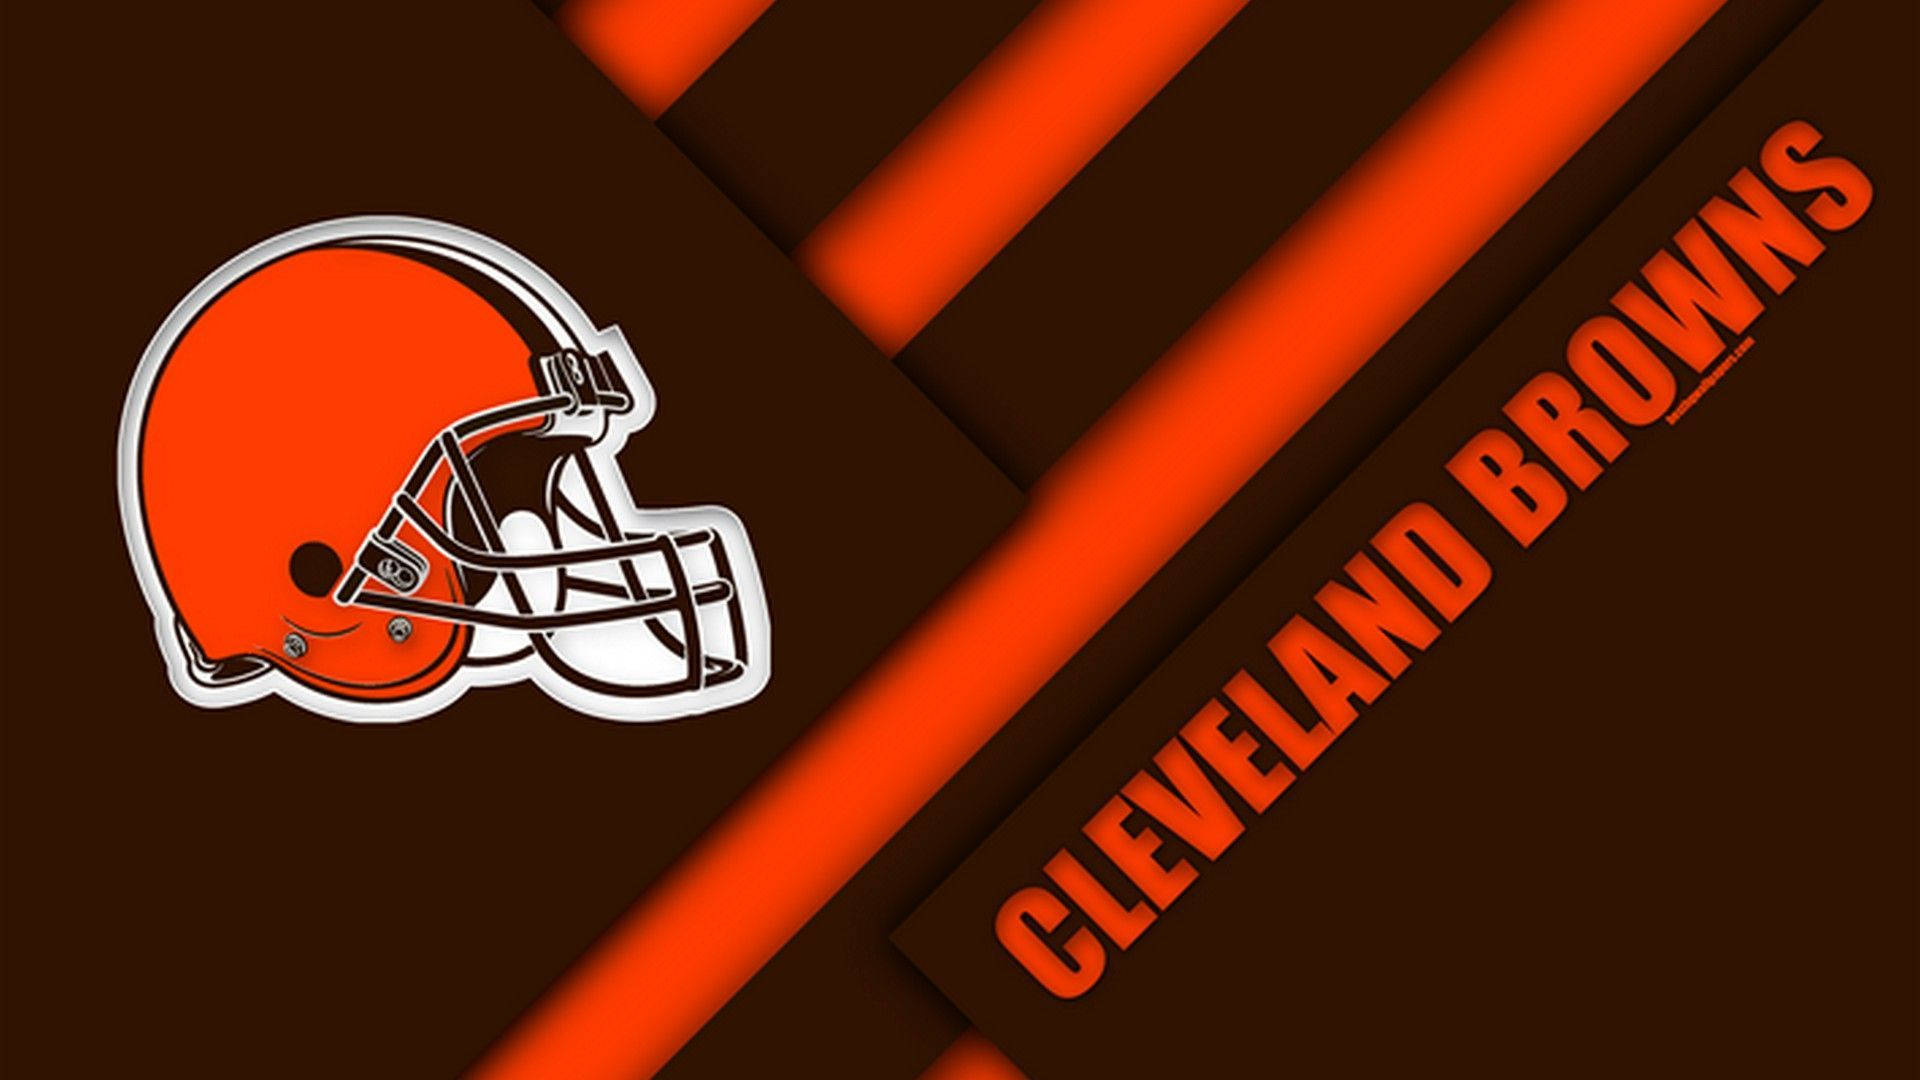 Cleveland Browns' Helmet Background